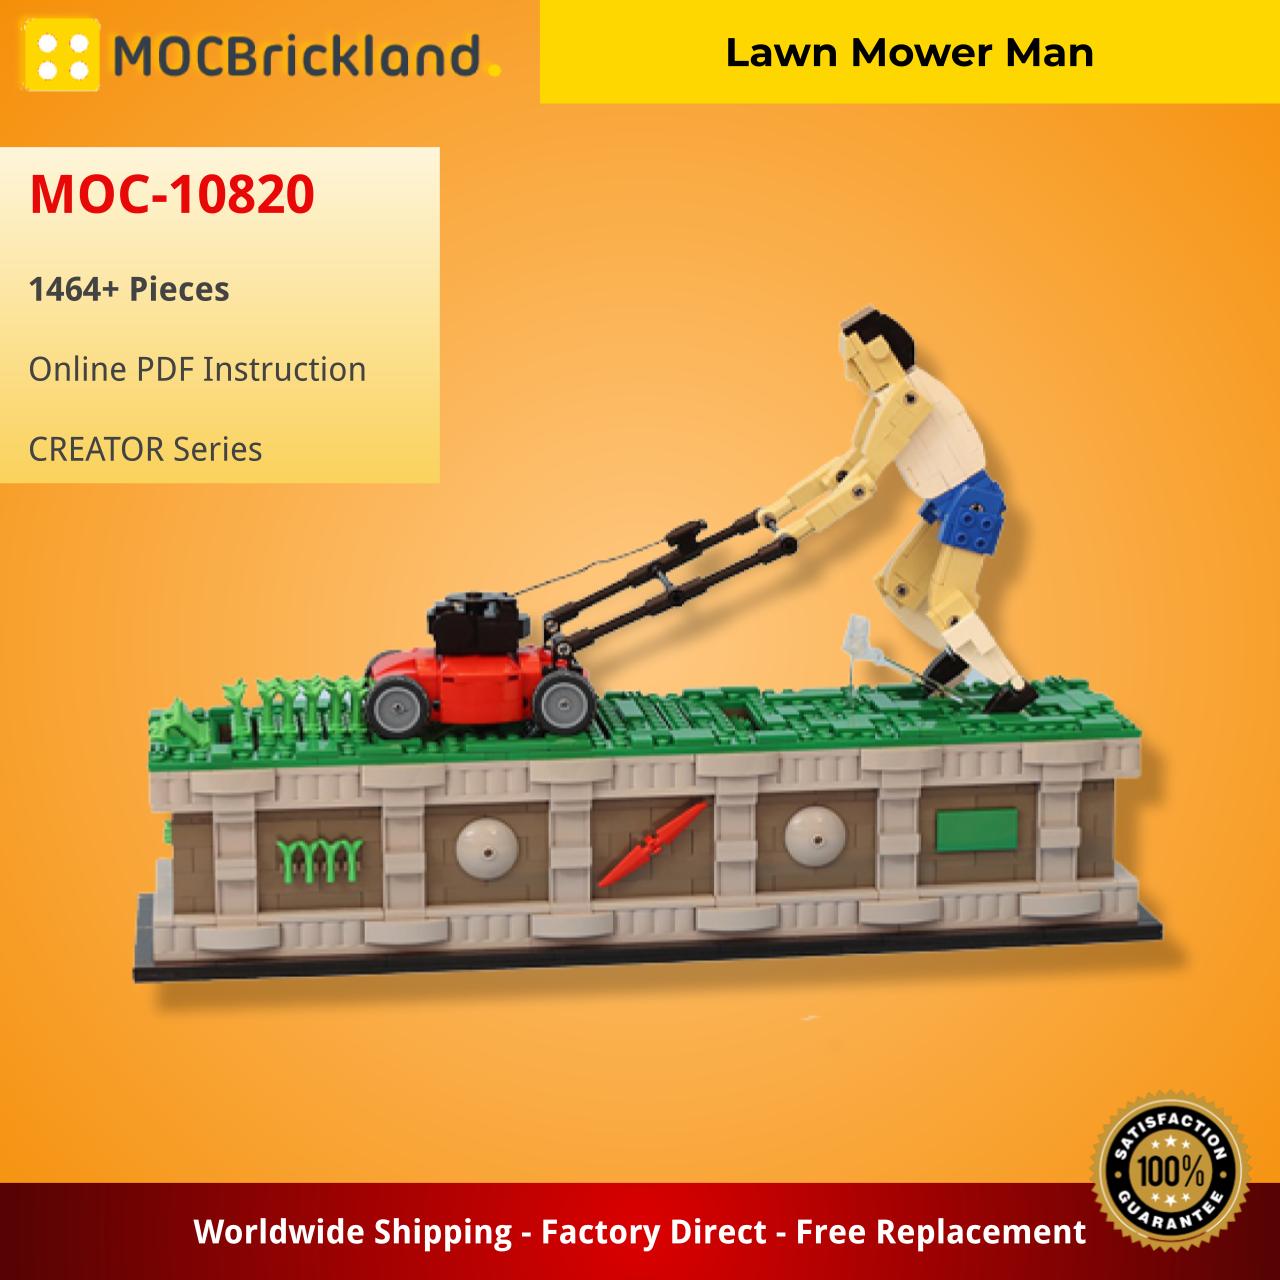 MOCBRICKLAND MOC-10820 Lawn Mower Man